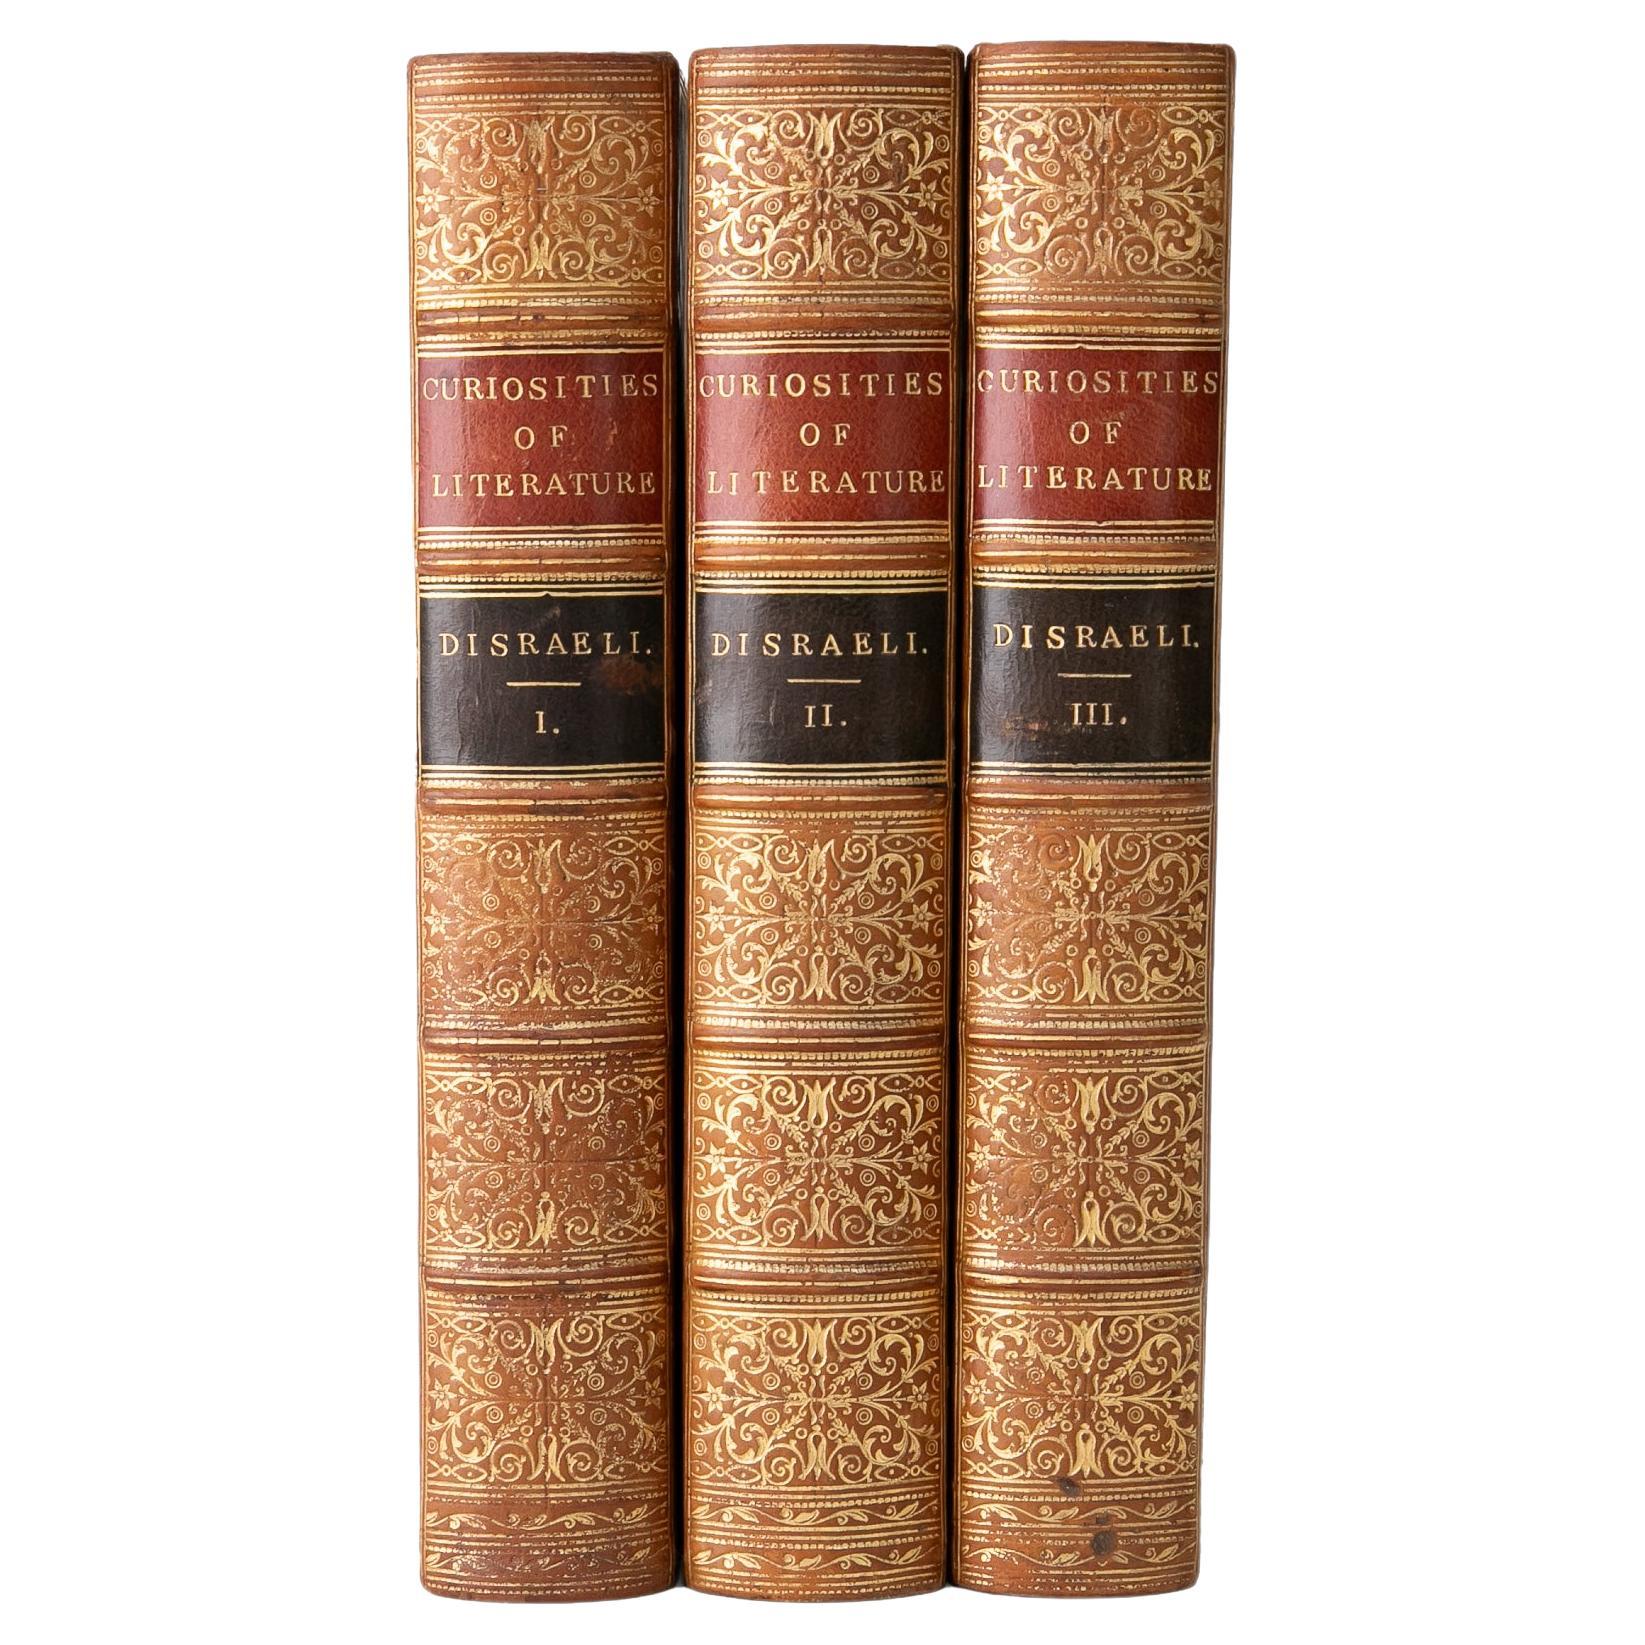 3 Volumes. Isaac Disraeli, Curiosities of Literature.